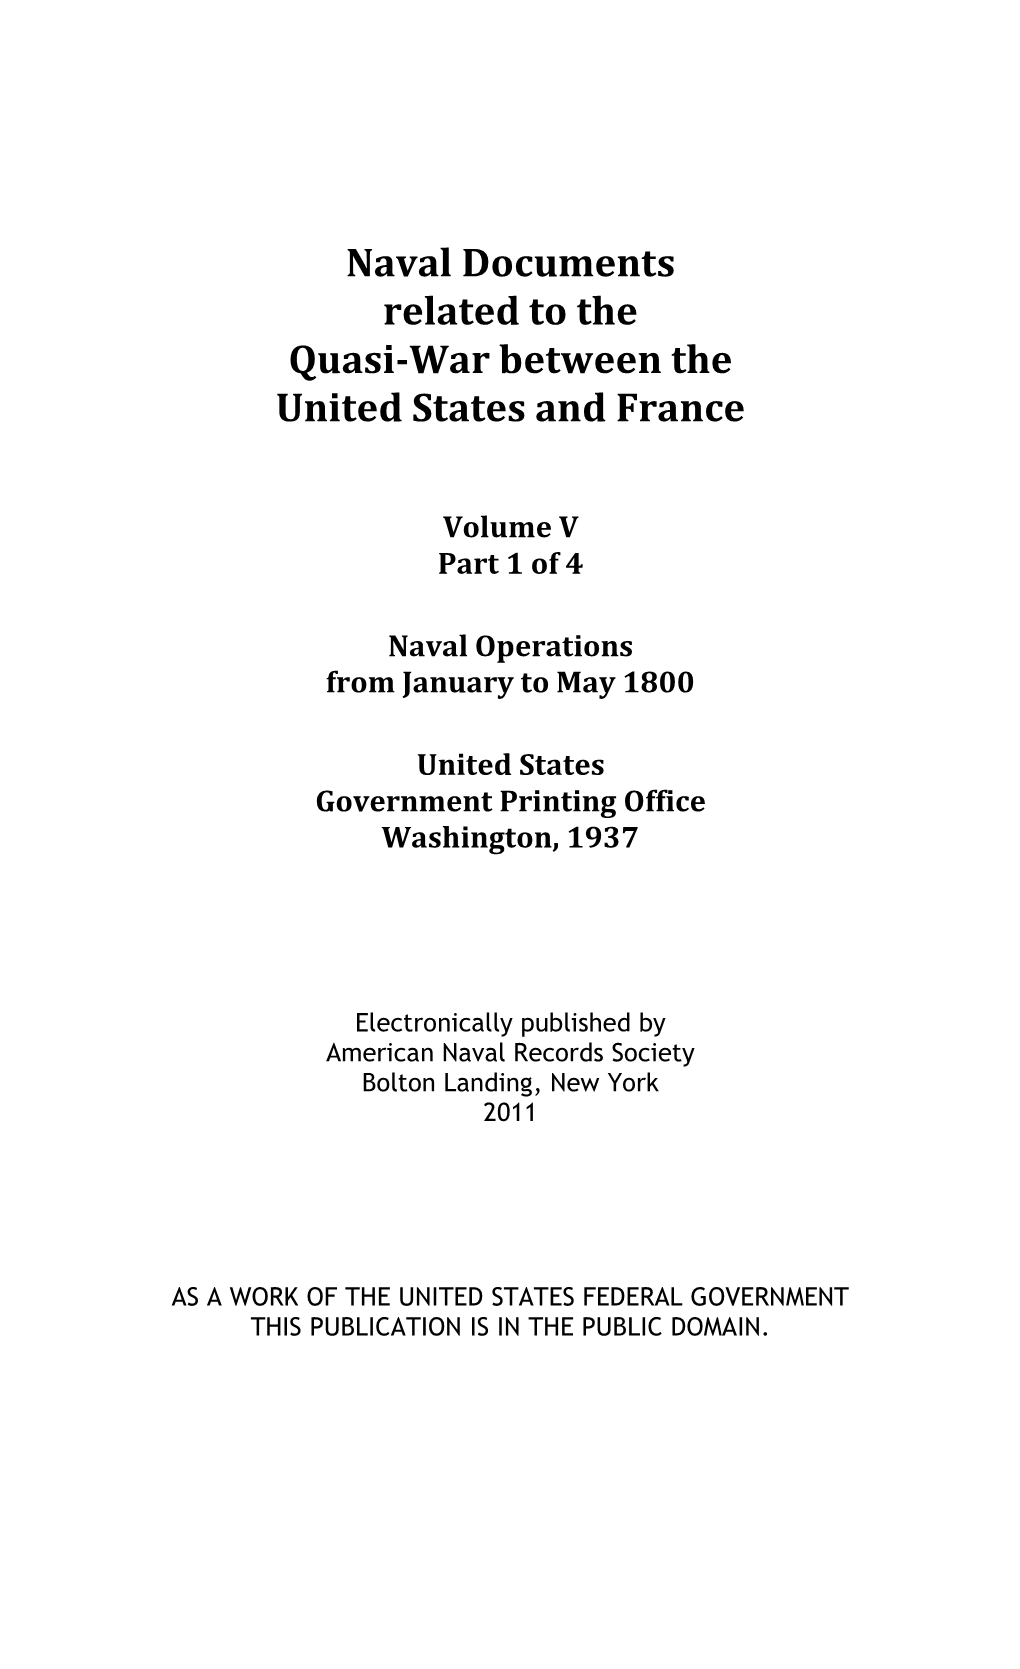 Quasi-War with France, Volume V Part 1